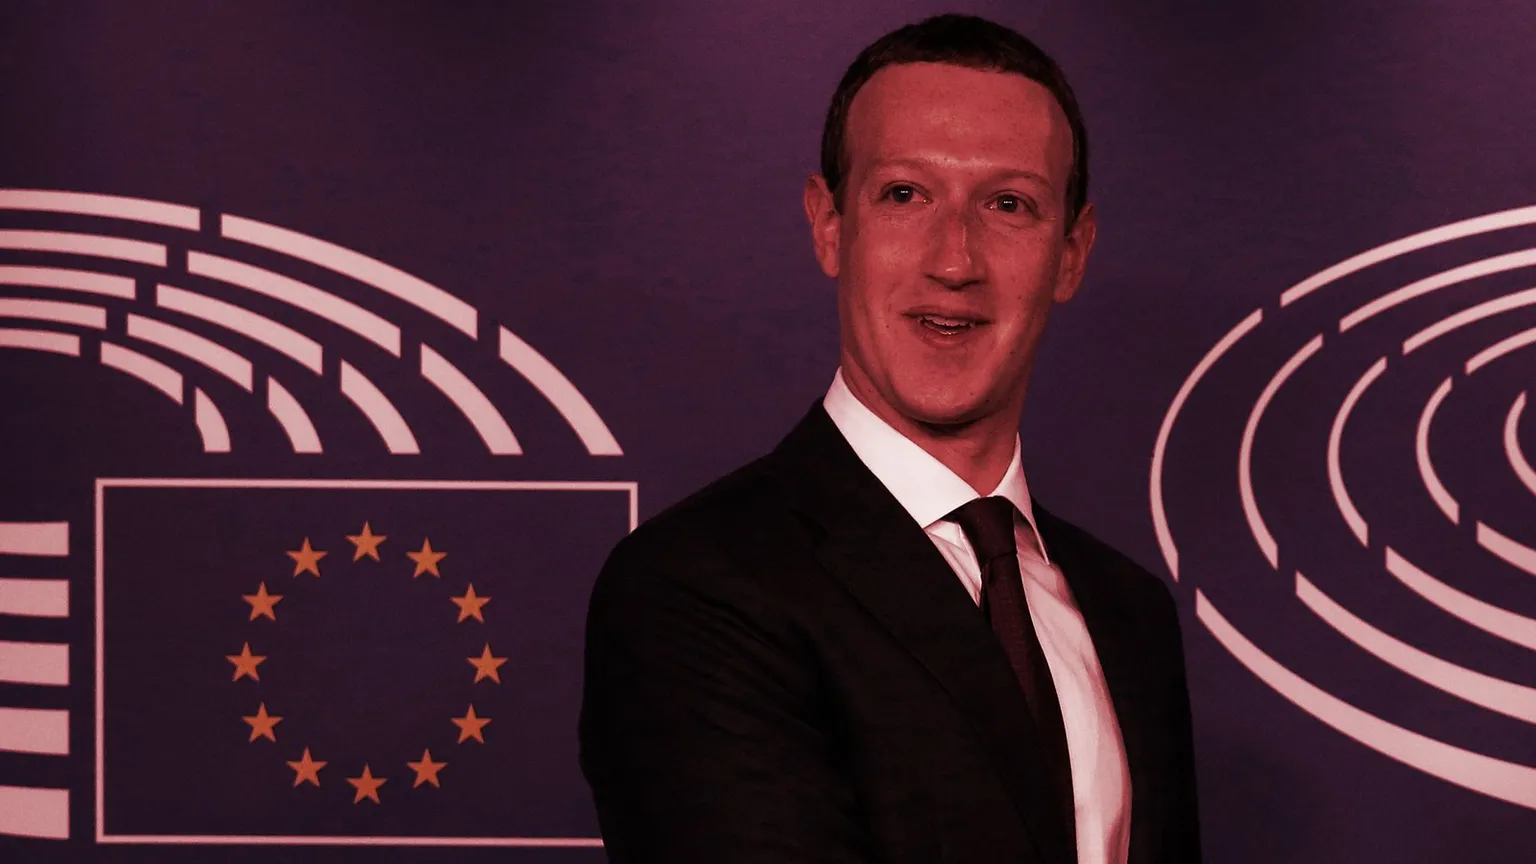 Mark Zuckerberg en el Parlamento Europeo en 2018. Imagen: Shutterstock